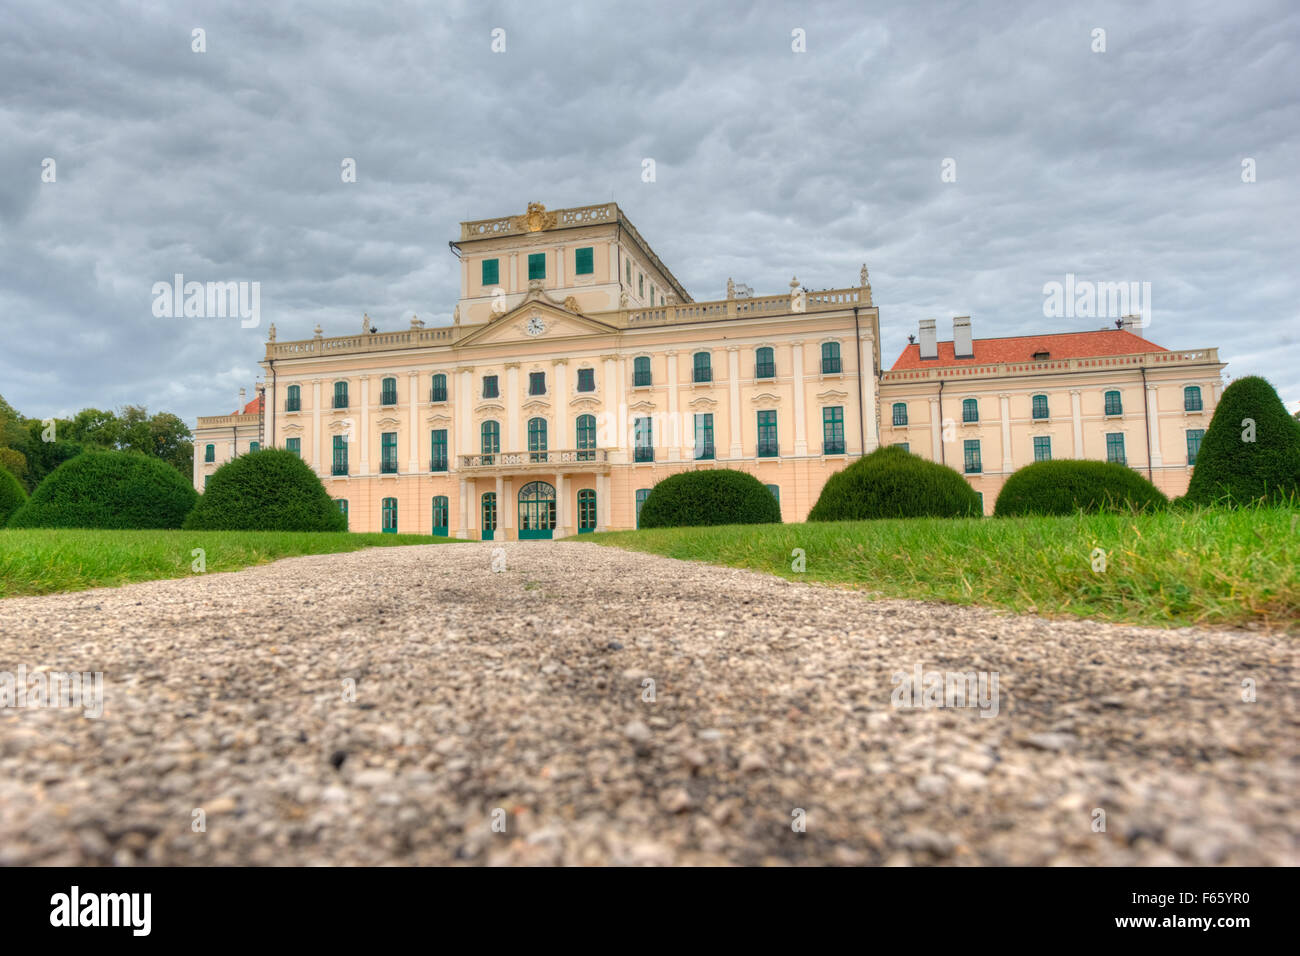 The Esterhazy Castle in Fertod, Hungary Stock Photo